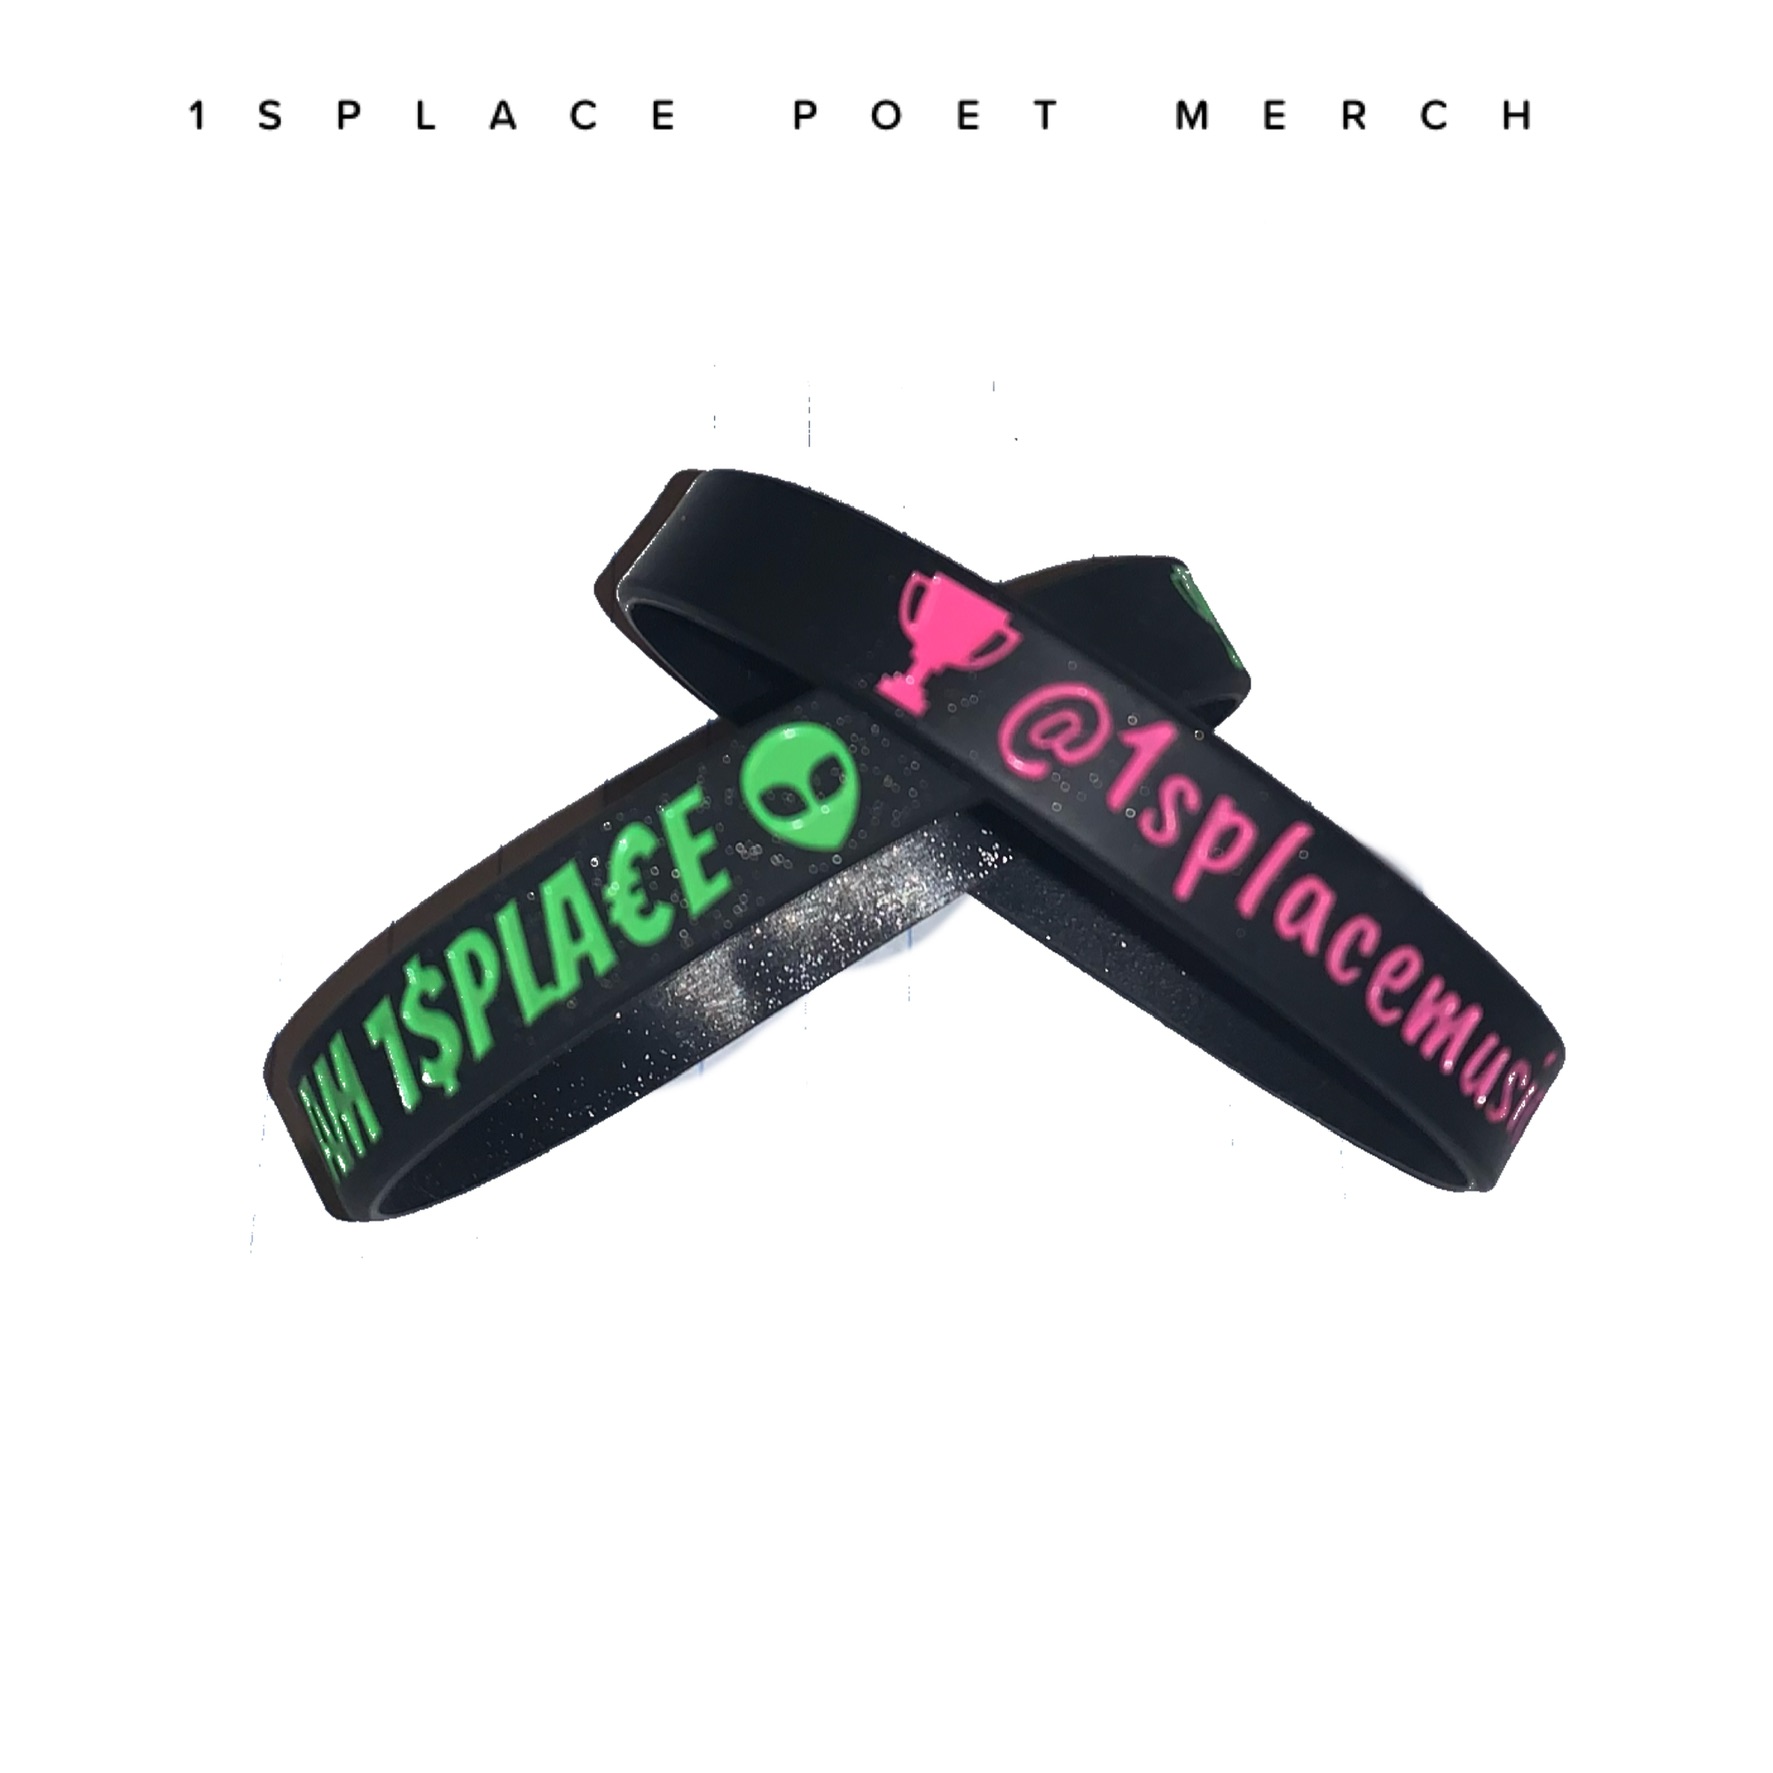 1splacemusic “I am 1splace” Wristbands